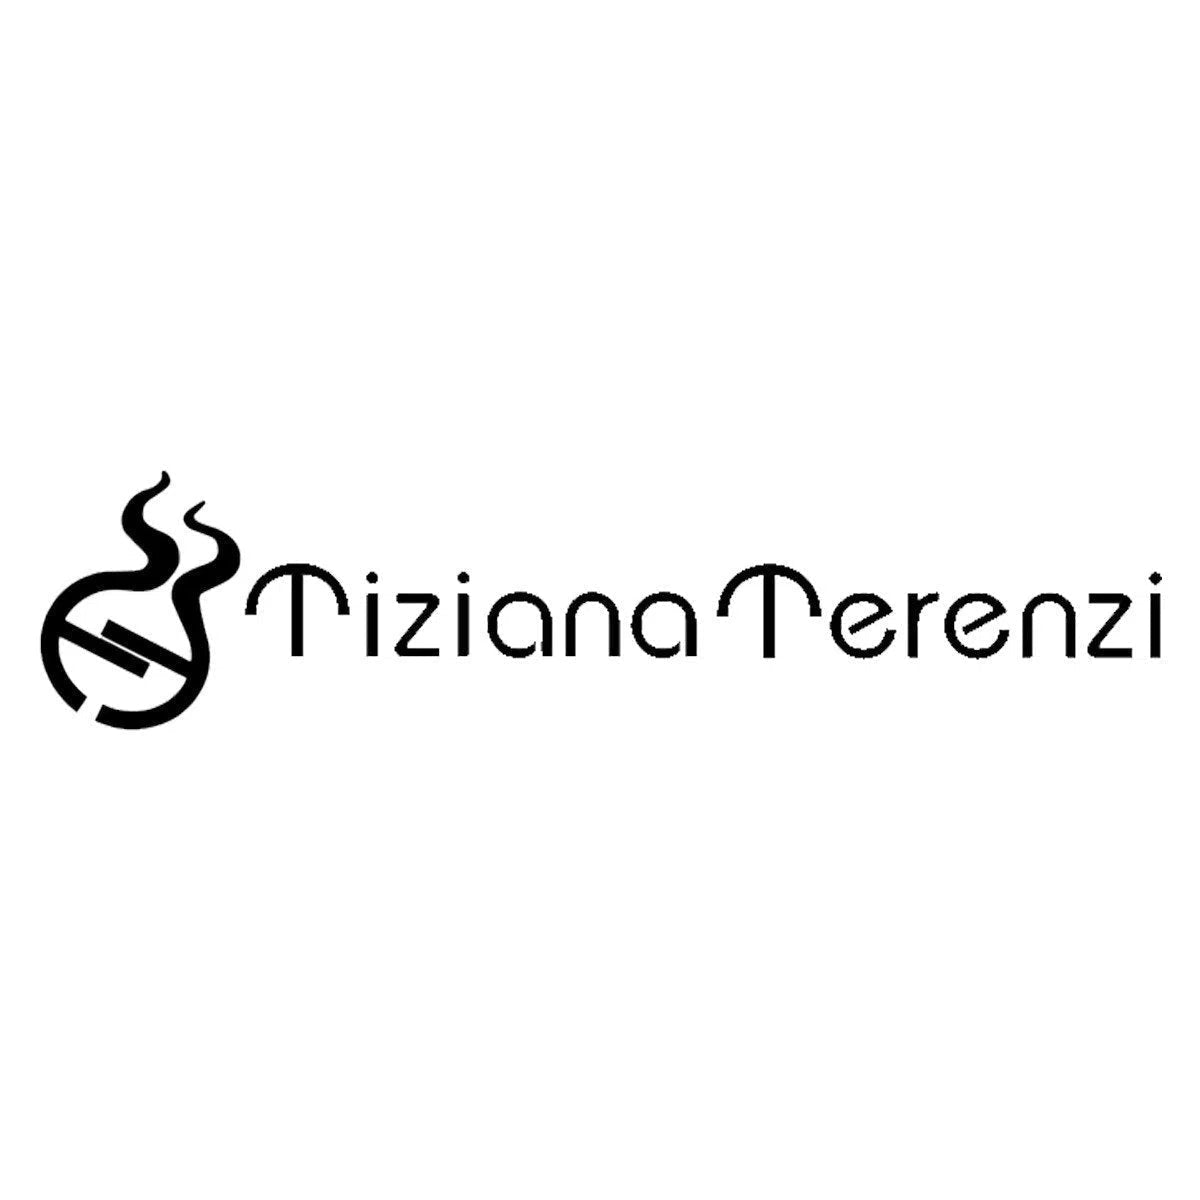 Perfumes Tiziana Terenzi originales solo en Prive Perfumes